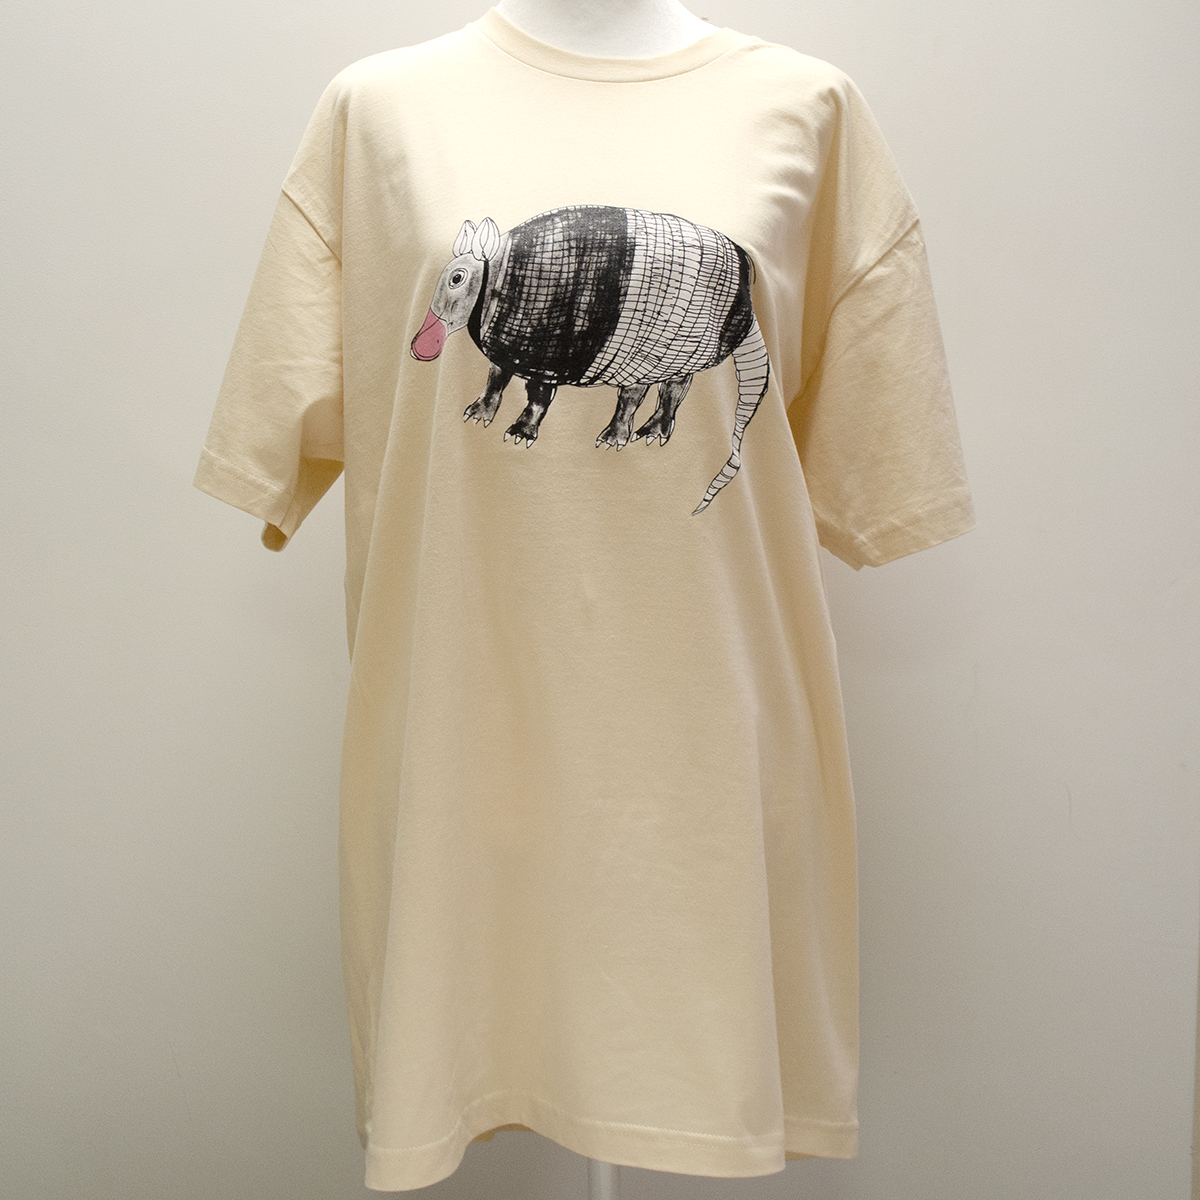 T-Shirt - Armadillo by Darryl Brooks